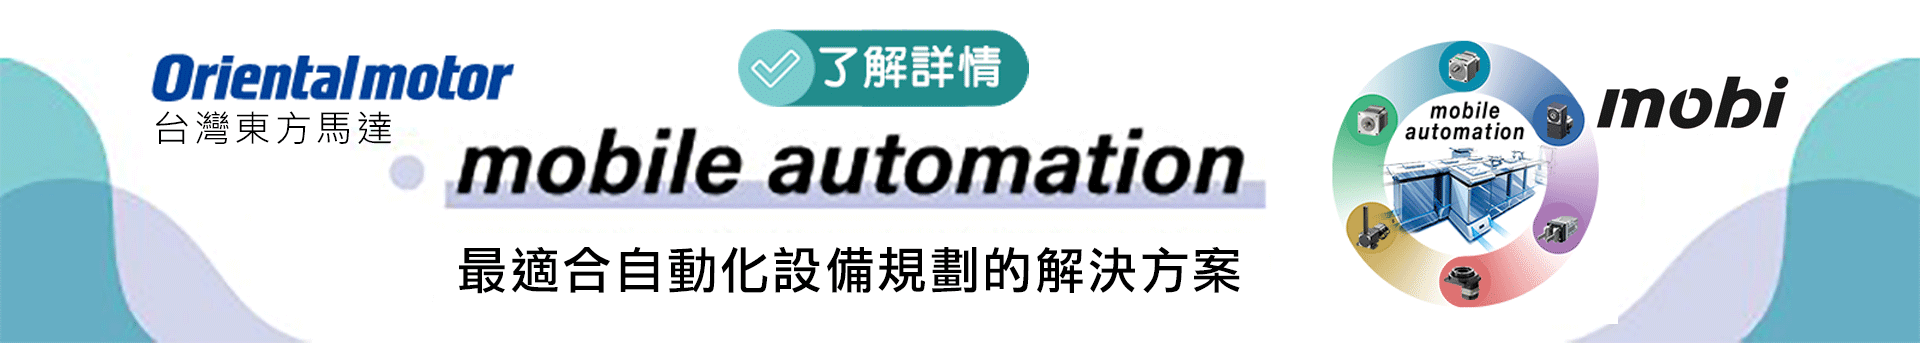 【AD_Mid】【台灣東方馬達】最適合自動化設備規劃的解決方案